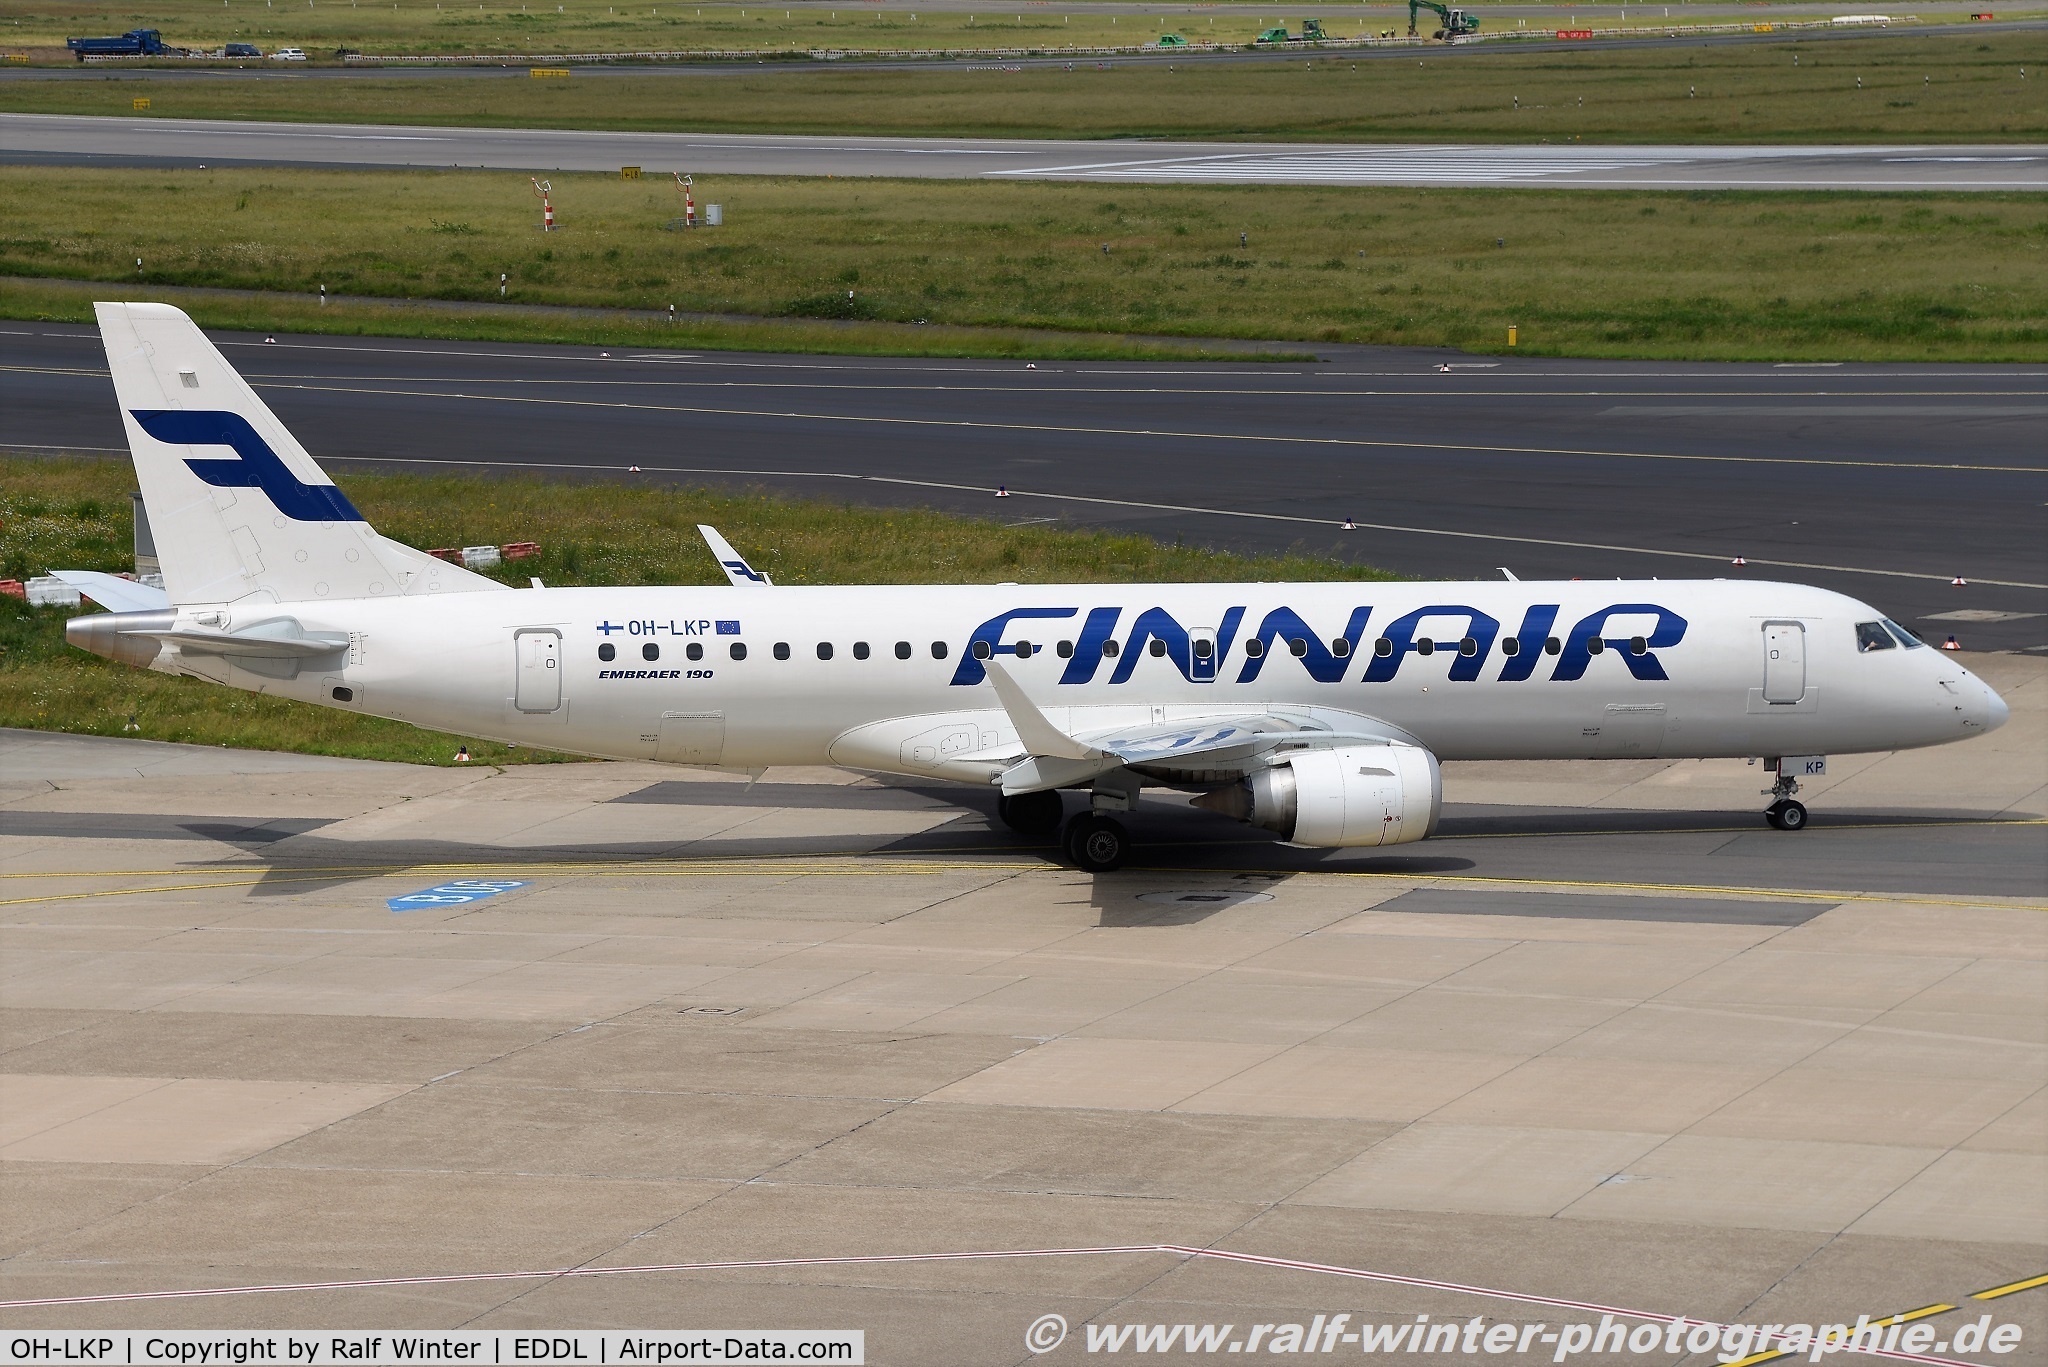 OH-LKP, 2011 Embraer 190LR (ERJ-190-100LR) C/N 19000416, Embraer ERJ-190LR 190-100LR - AY FIN Finnair - 19000416 - OH-LKP - 13.06.2019 - DUS